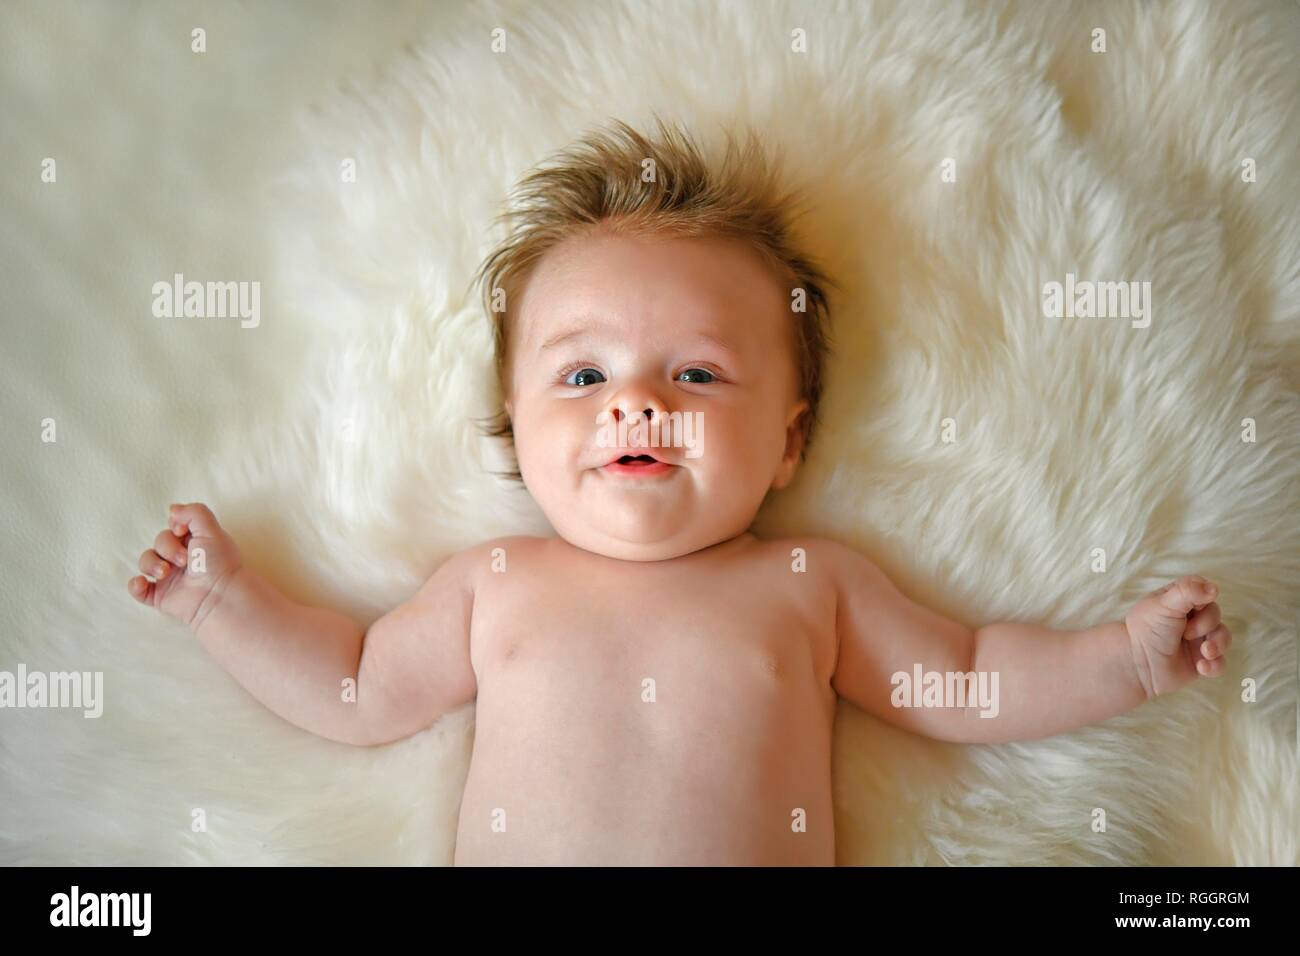 Infant, three months, lying on fur, portrait, Baden-Württemberg, Germany Stock Photo